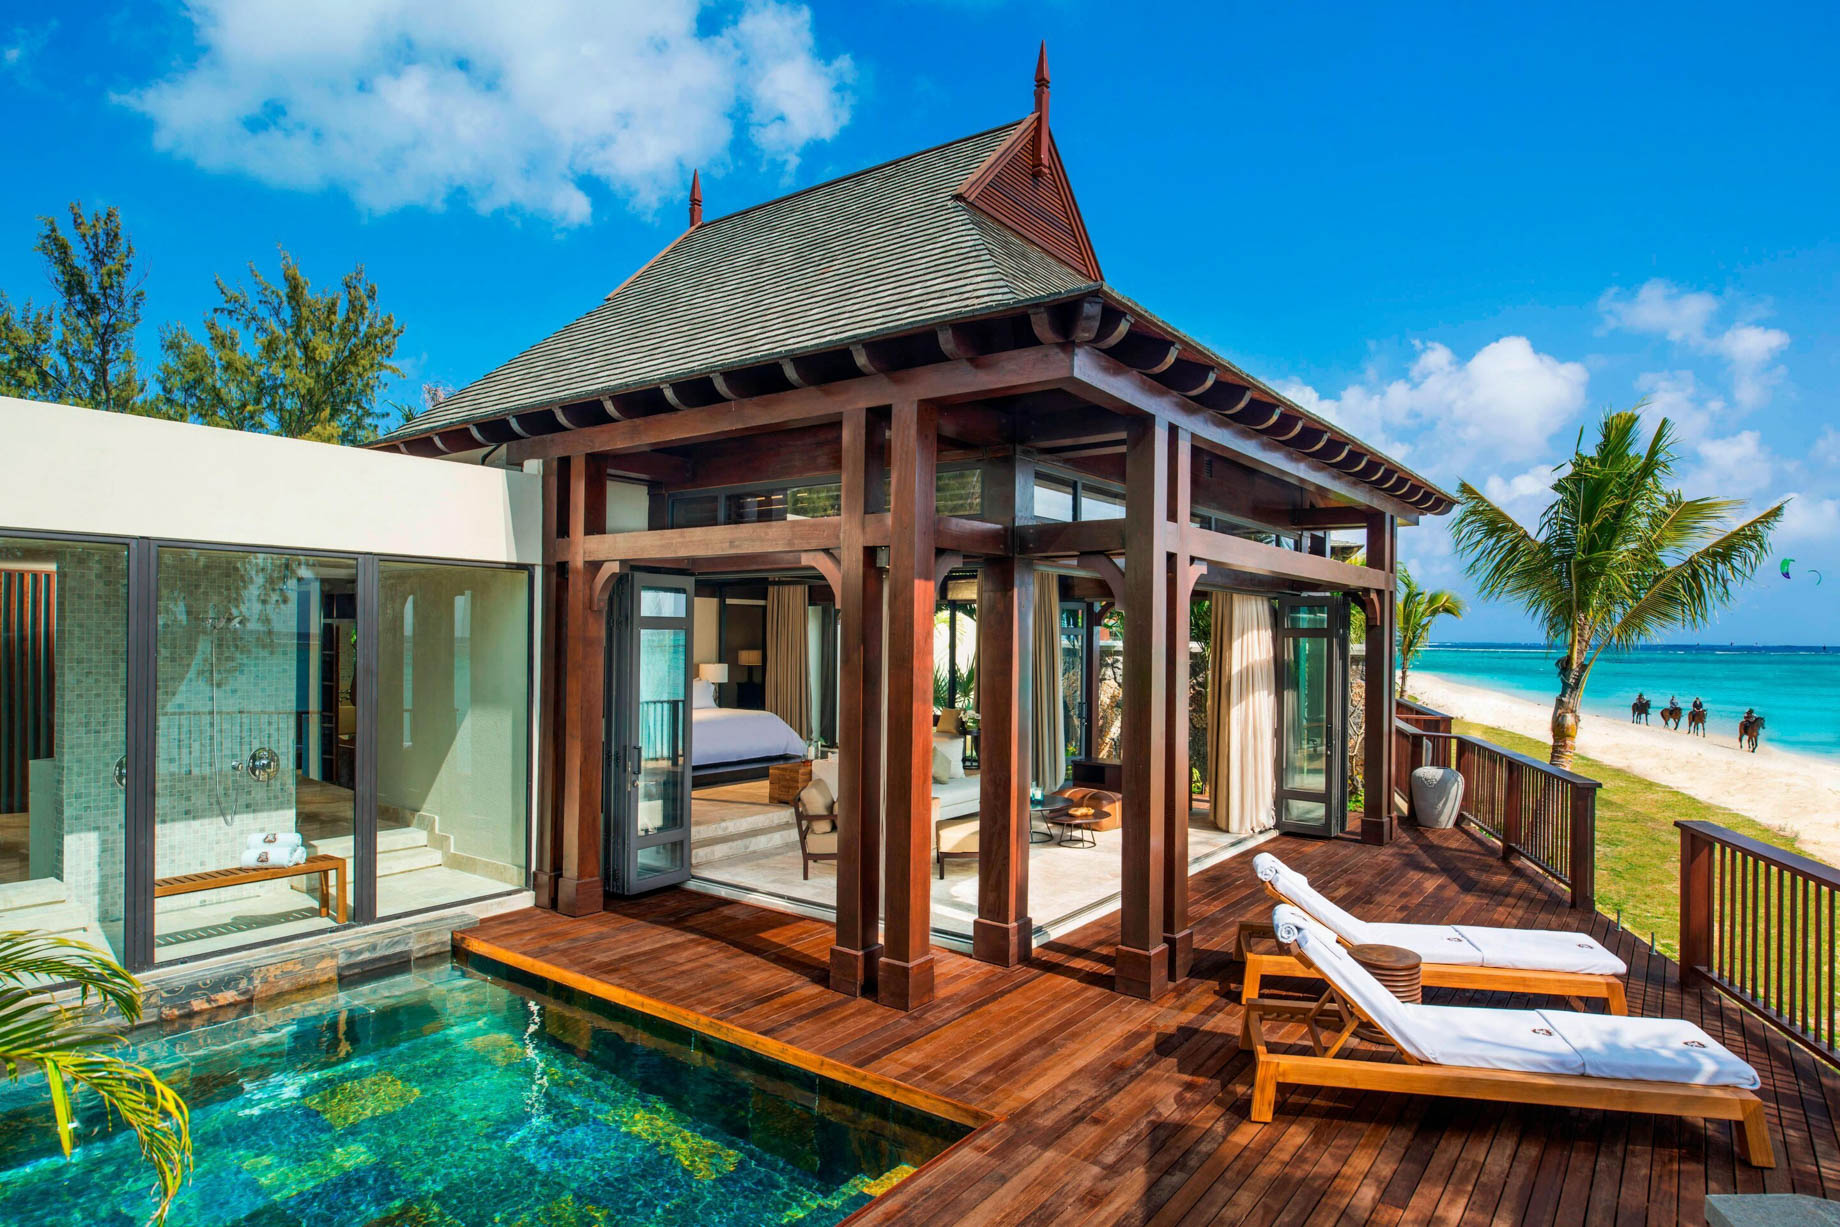 JW Marriott Mauritius Resort - Mauritius - Villa Terrace View